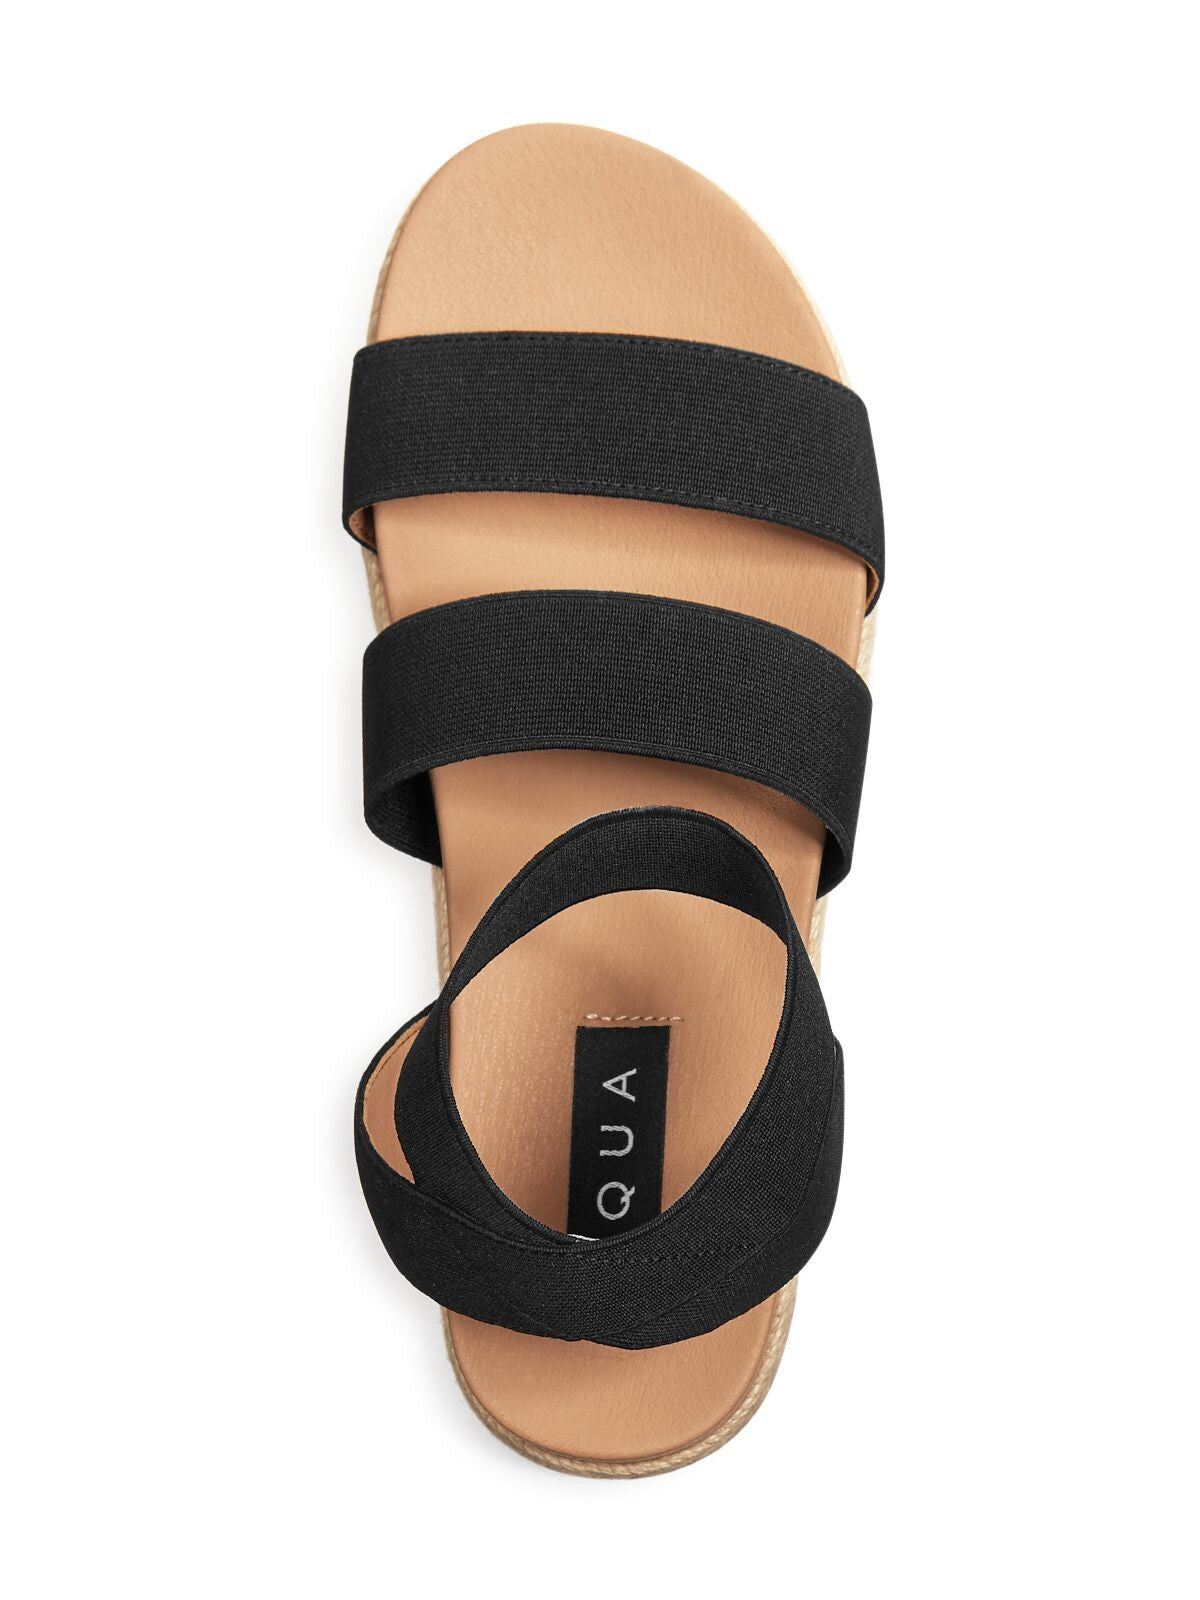 AQUA Womens Black Jute Accent Stretch Ankle Strap Tali Round Toe Platform Slip On Espadrille Shoes 7.5 M